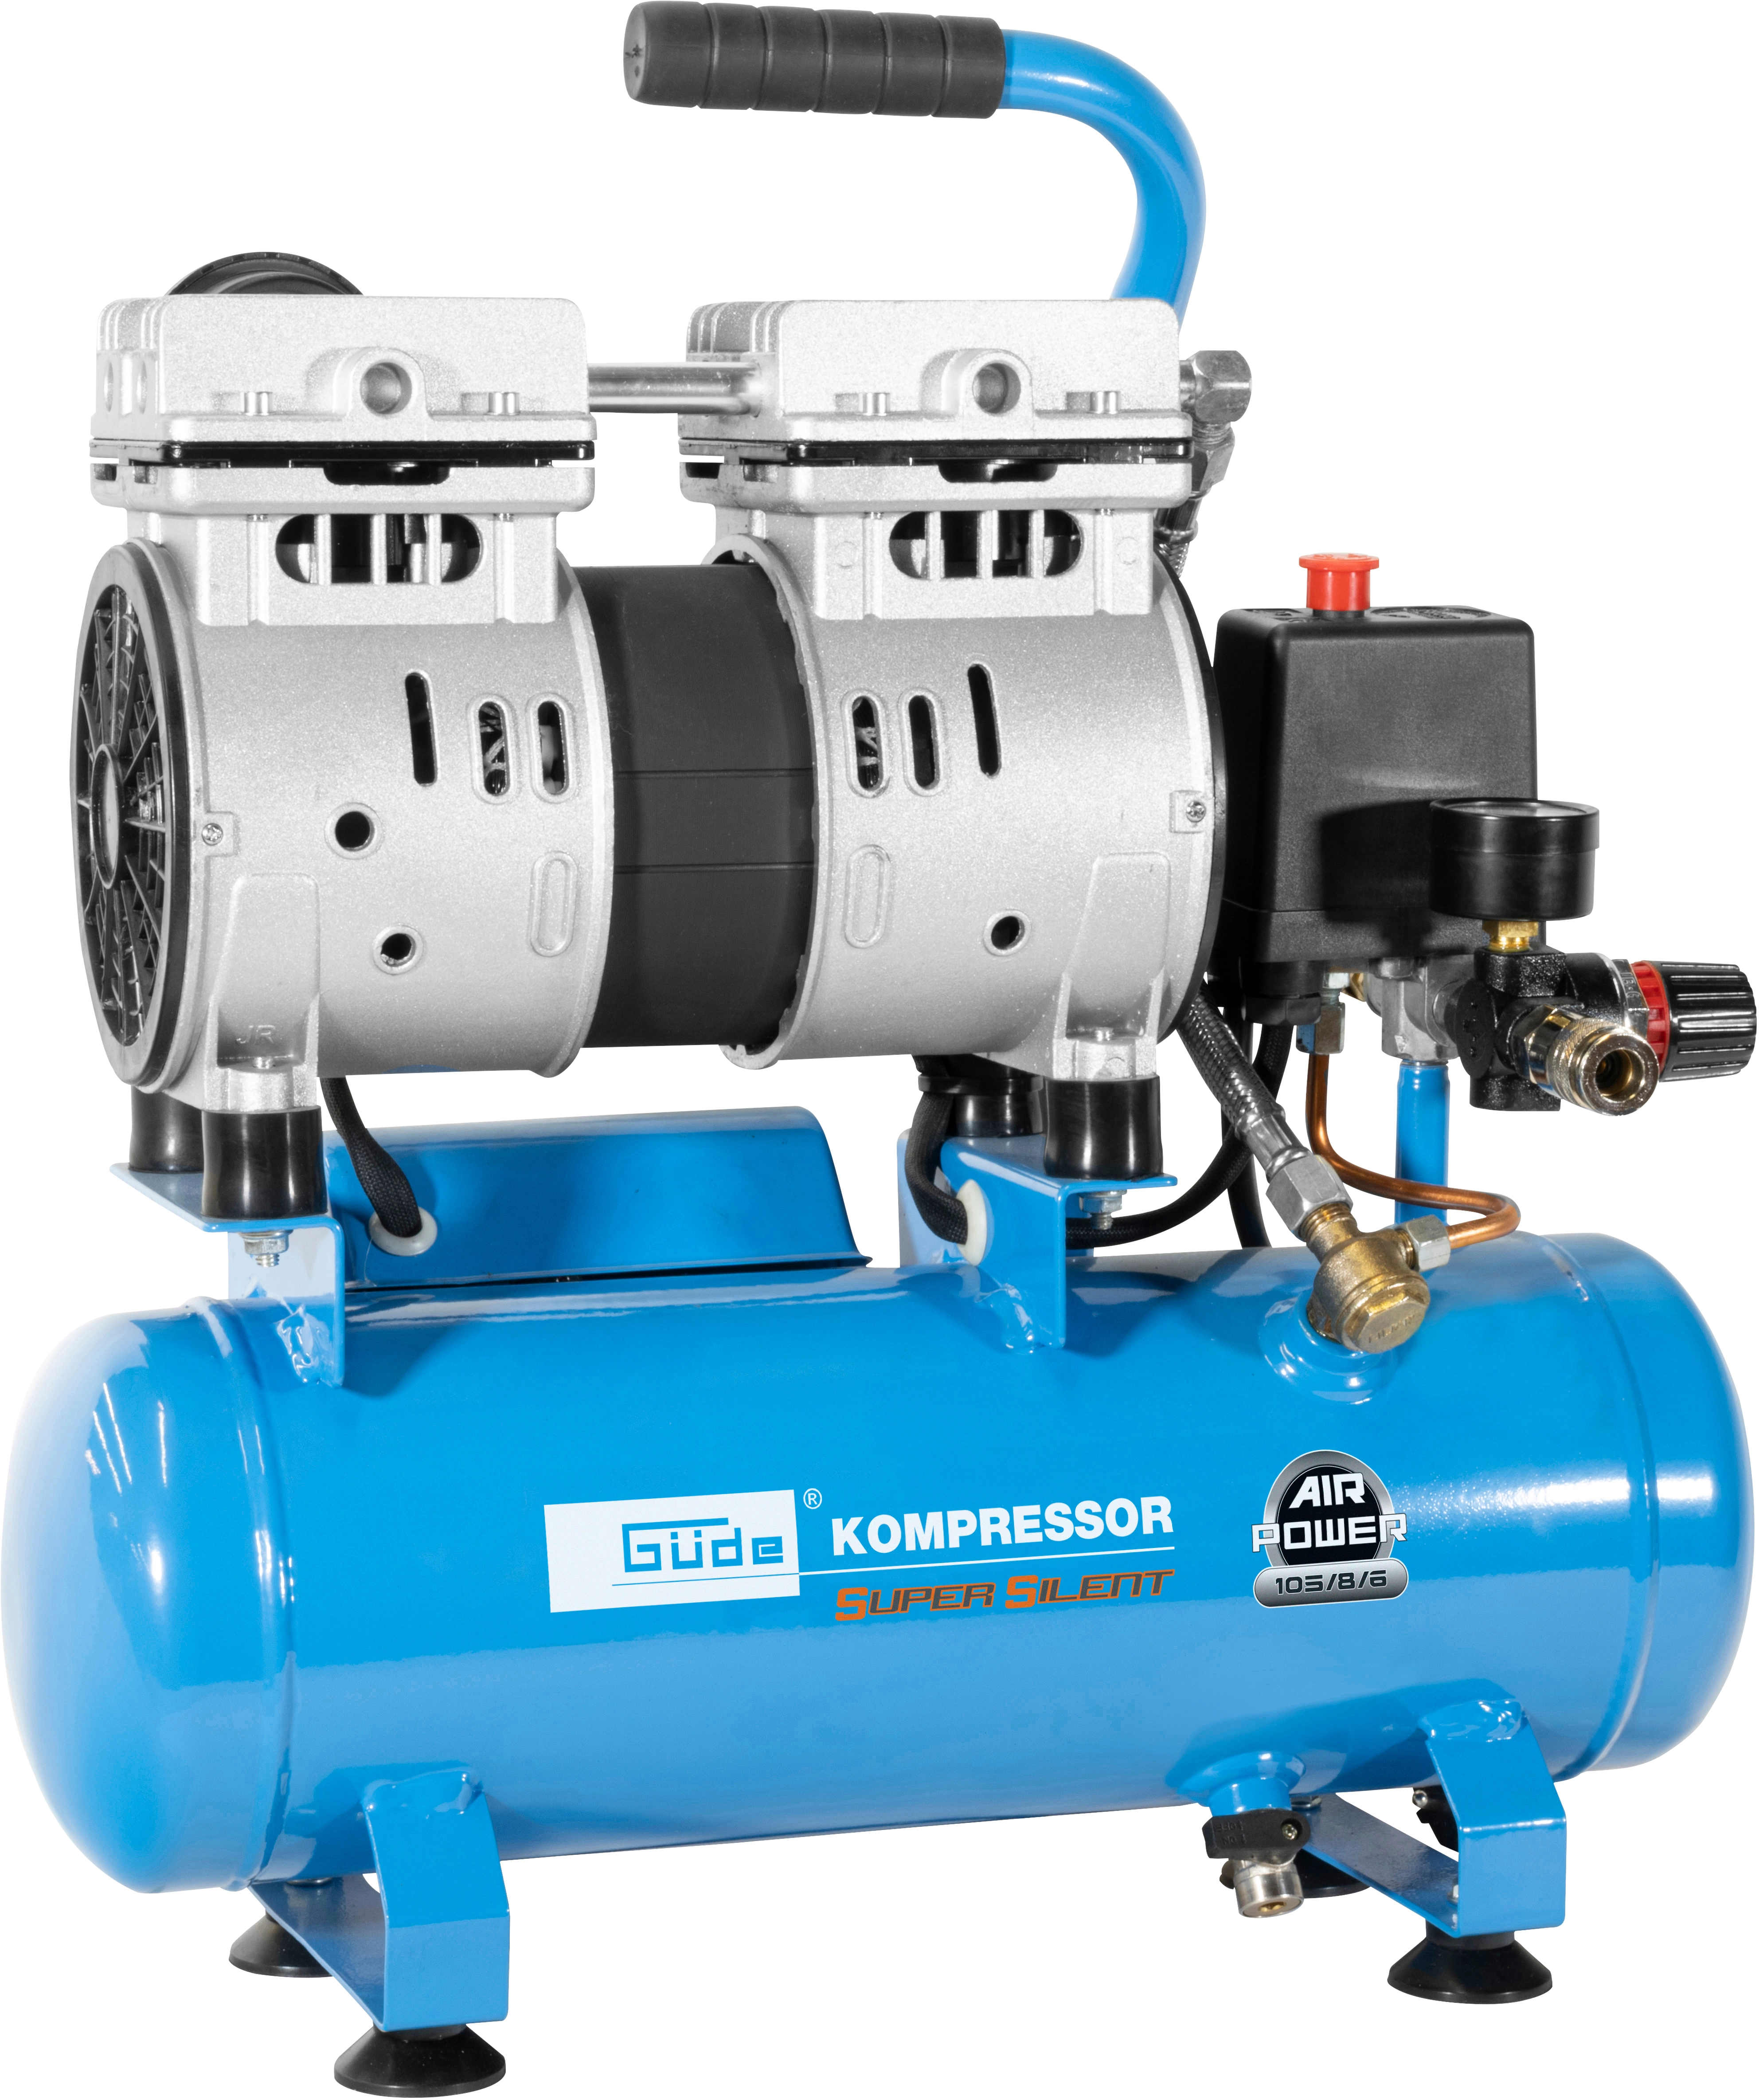 Noiseless Kompressor COMPACT 24 (klein), Kompressoren